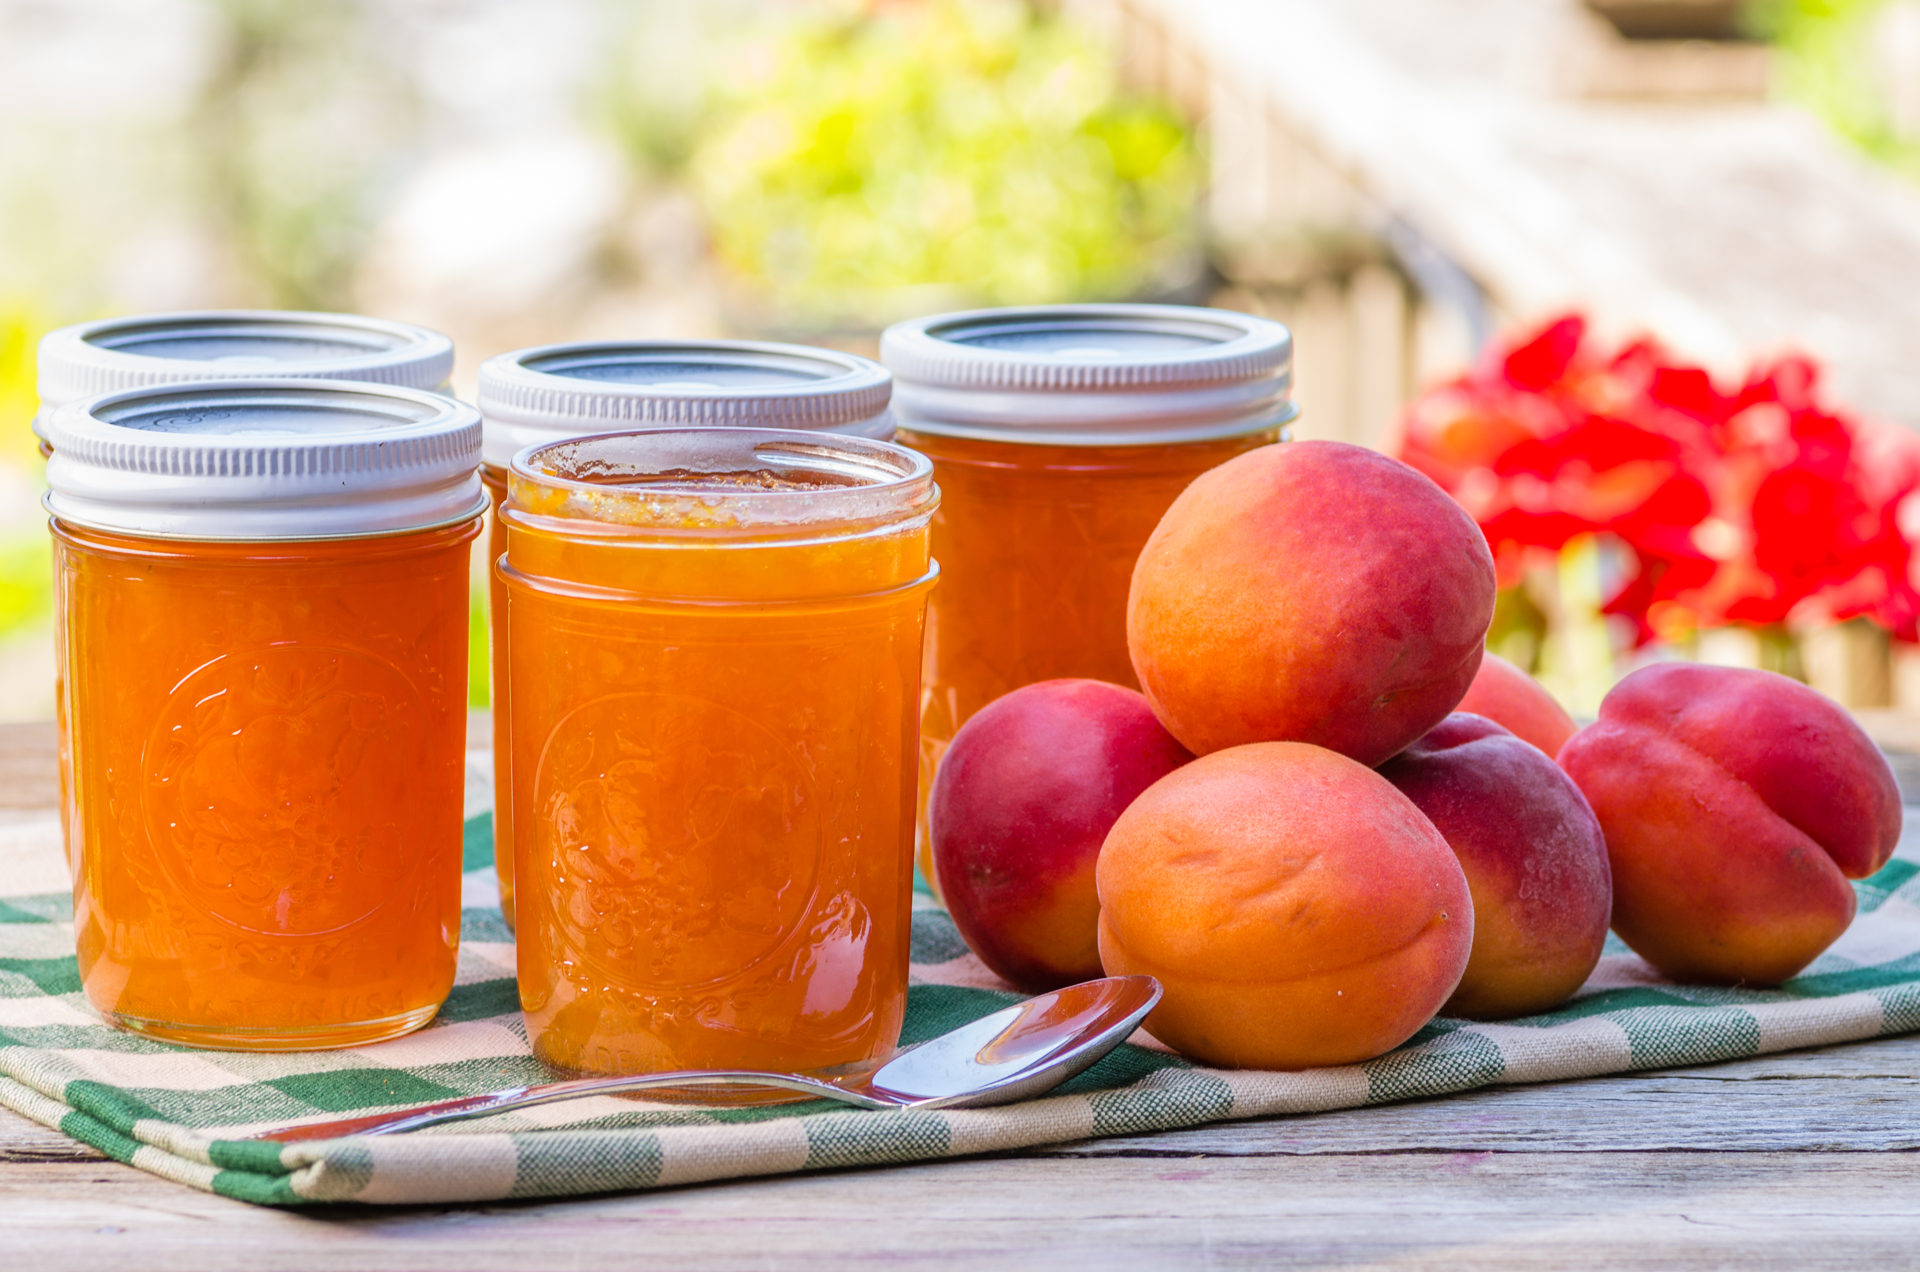 Jars of homemade apricot jam or preserves